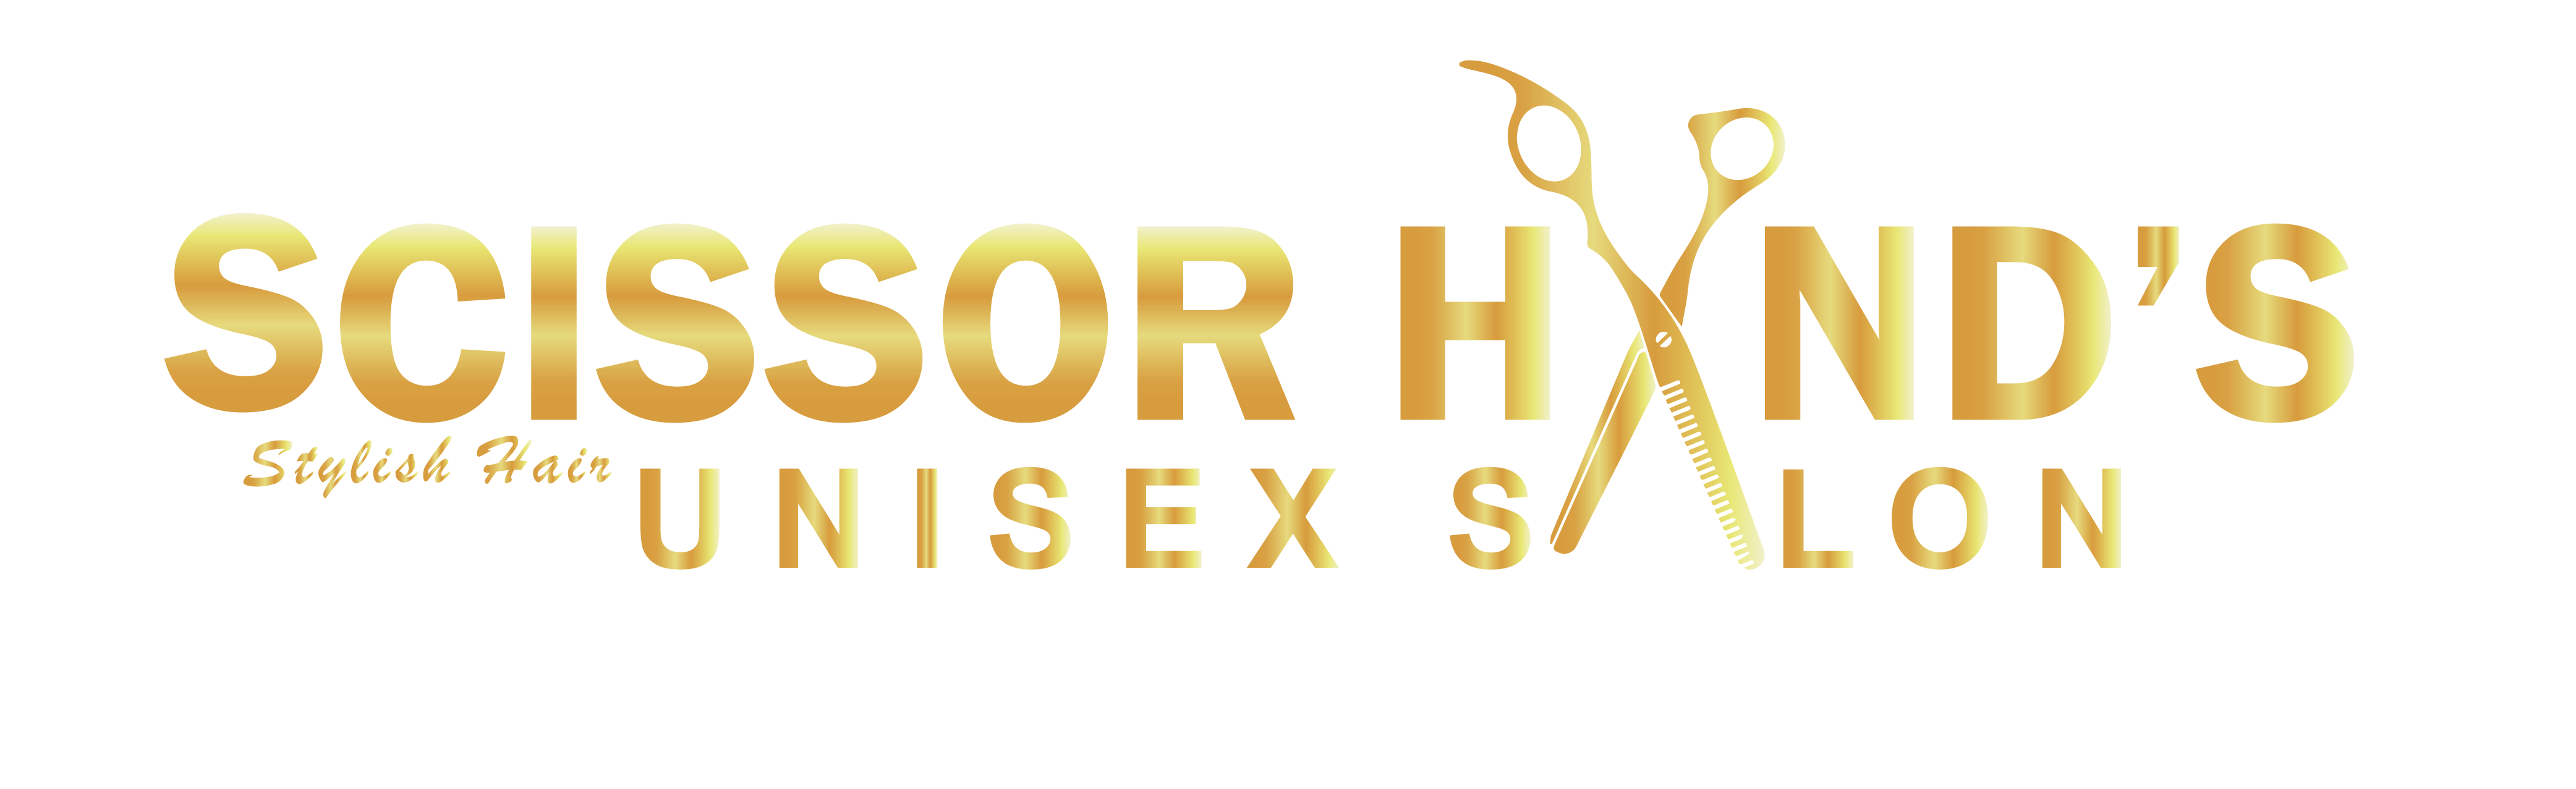 Scissor Hand's Unisex Salon Kudasan|Salon|Active Life